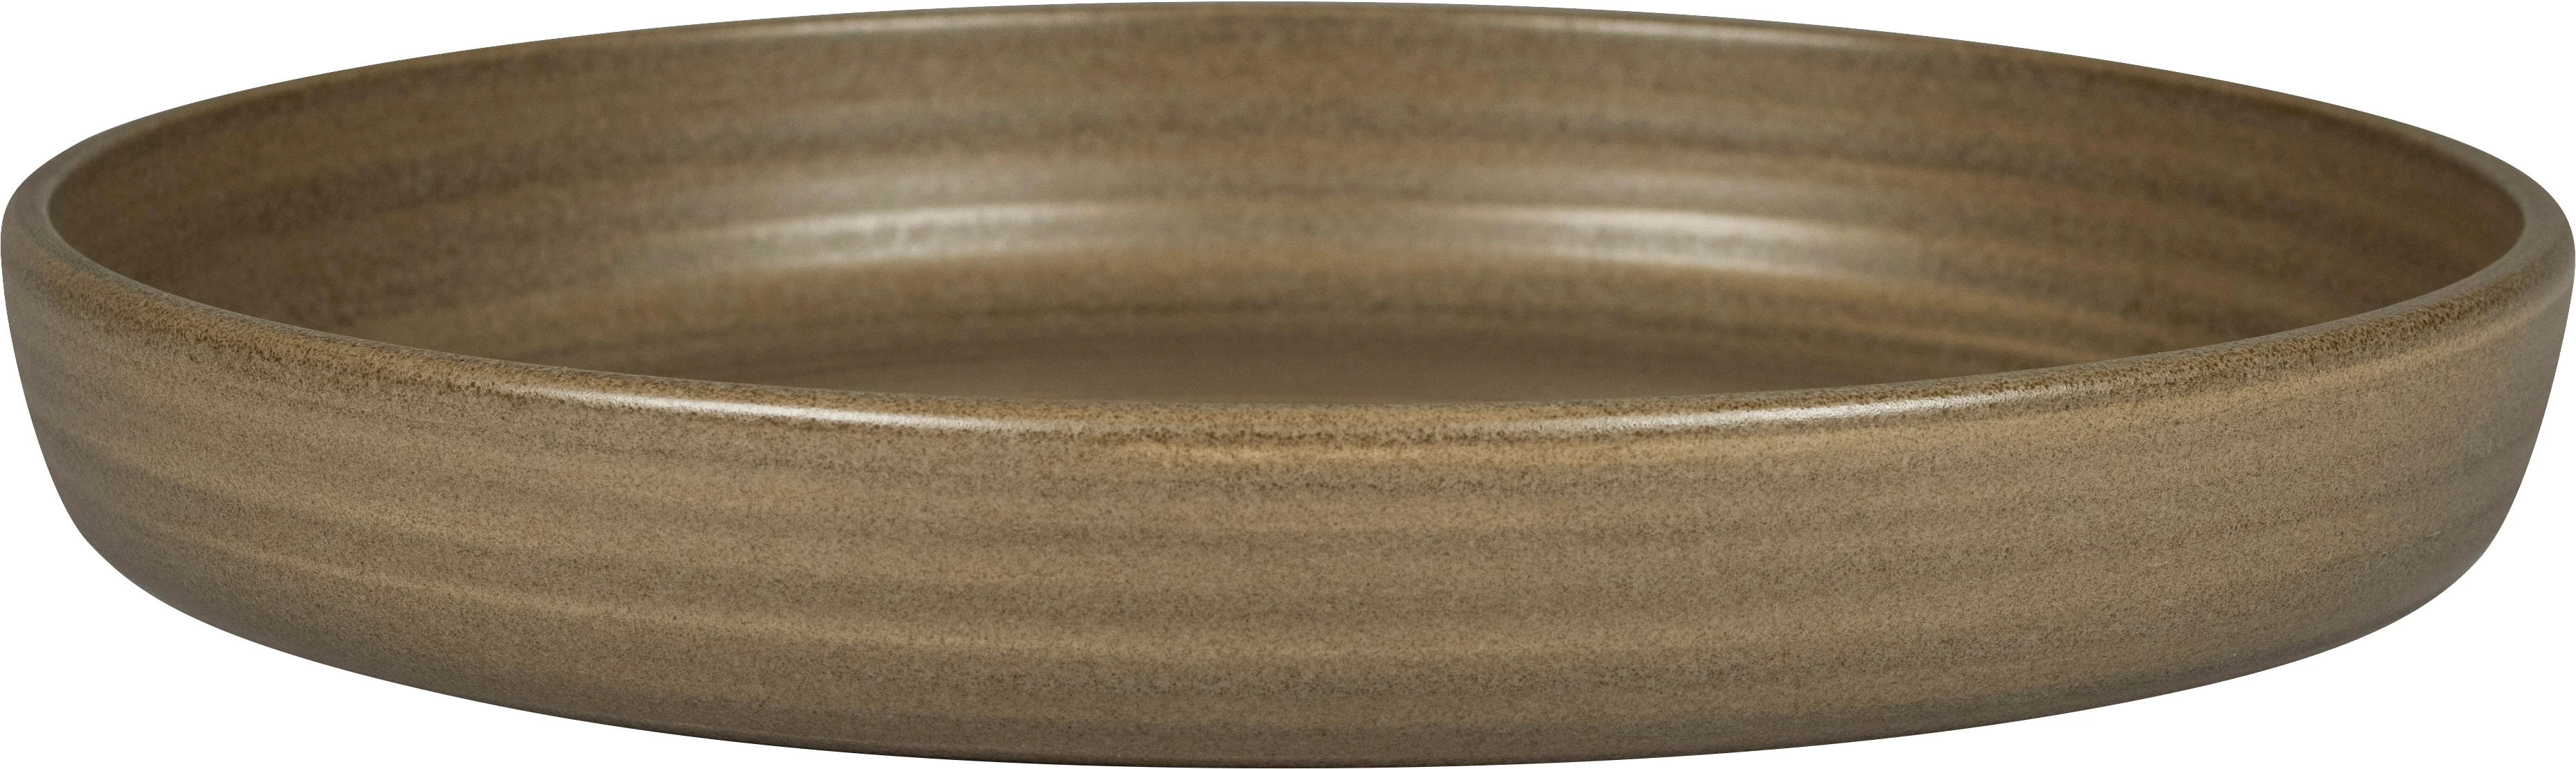 RAK Ease Selva skål, mørkebrun, 190 cl, ø28 cm